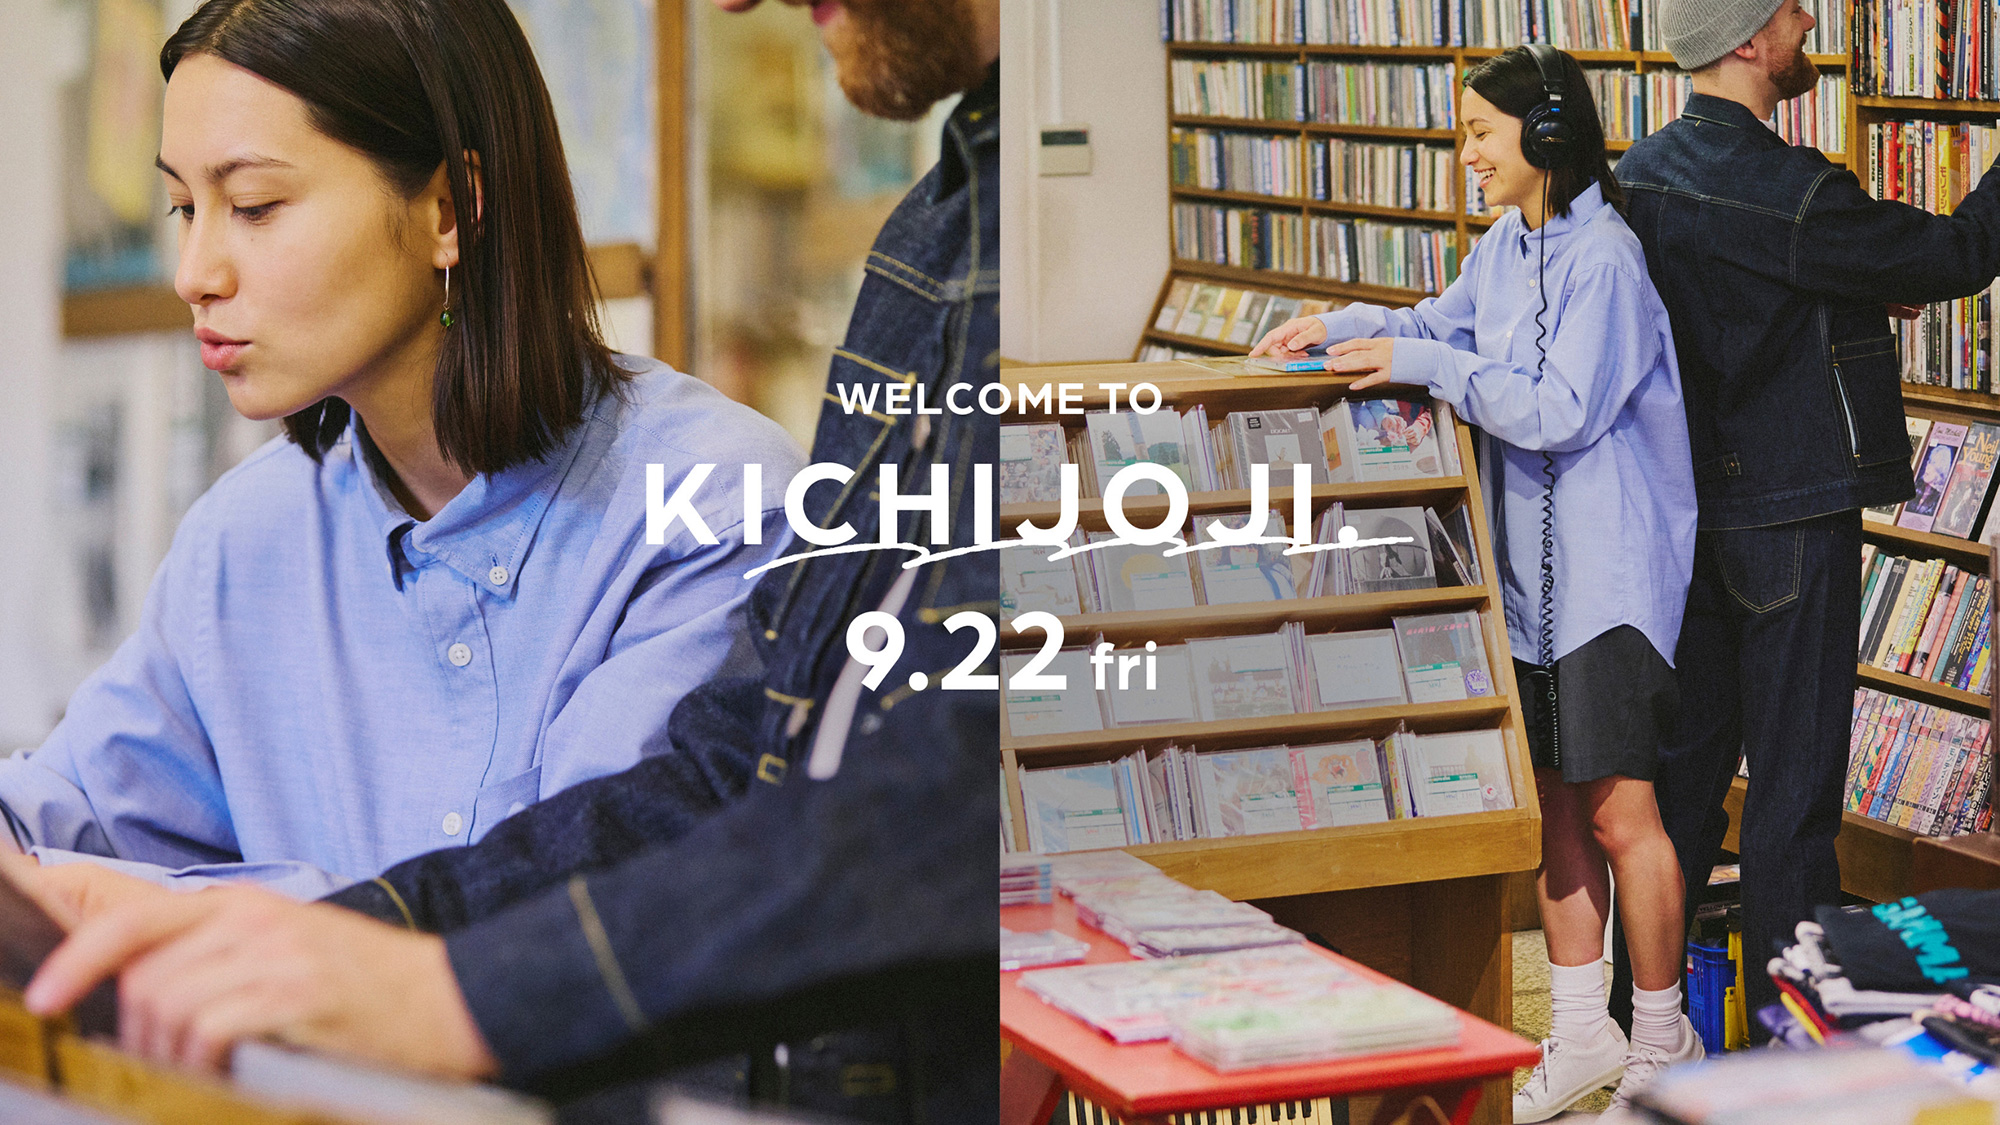 WELCOME TO KICHIJOJI. #2 CULTURE “FEEL THE TOWN.”